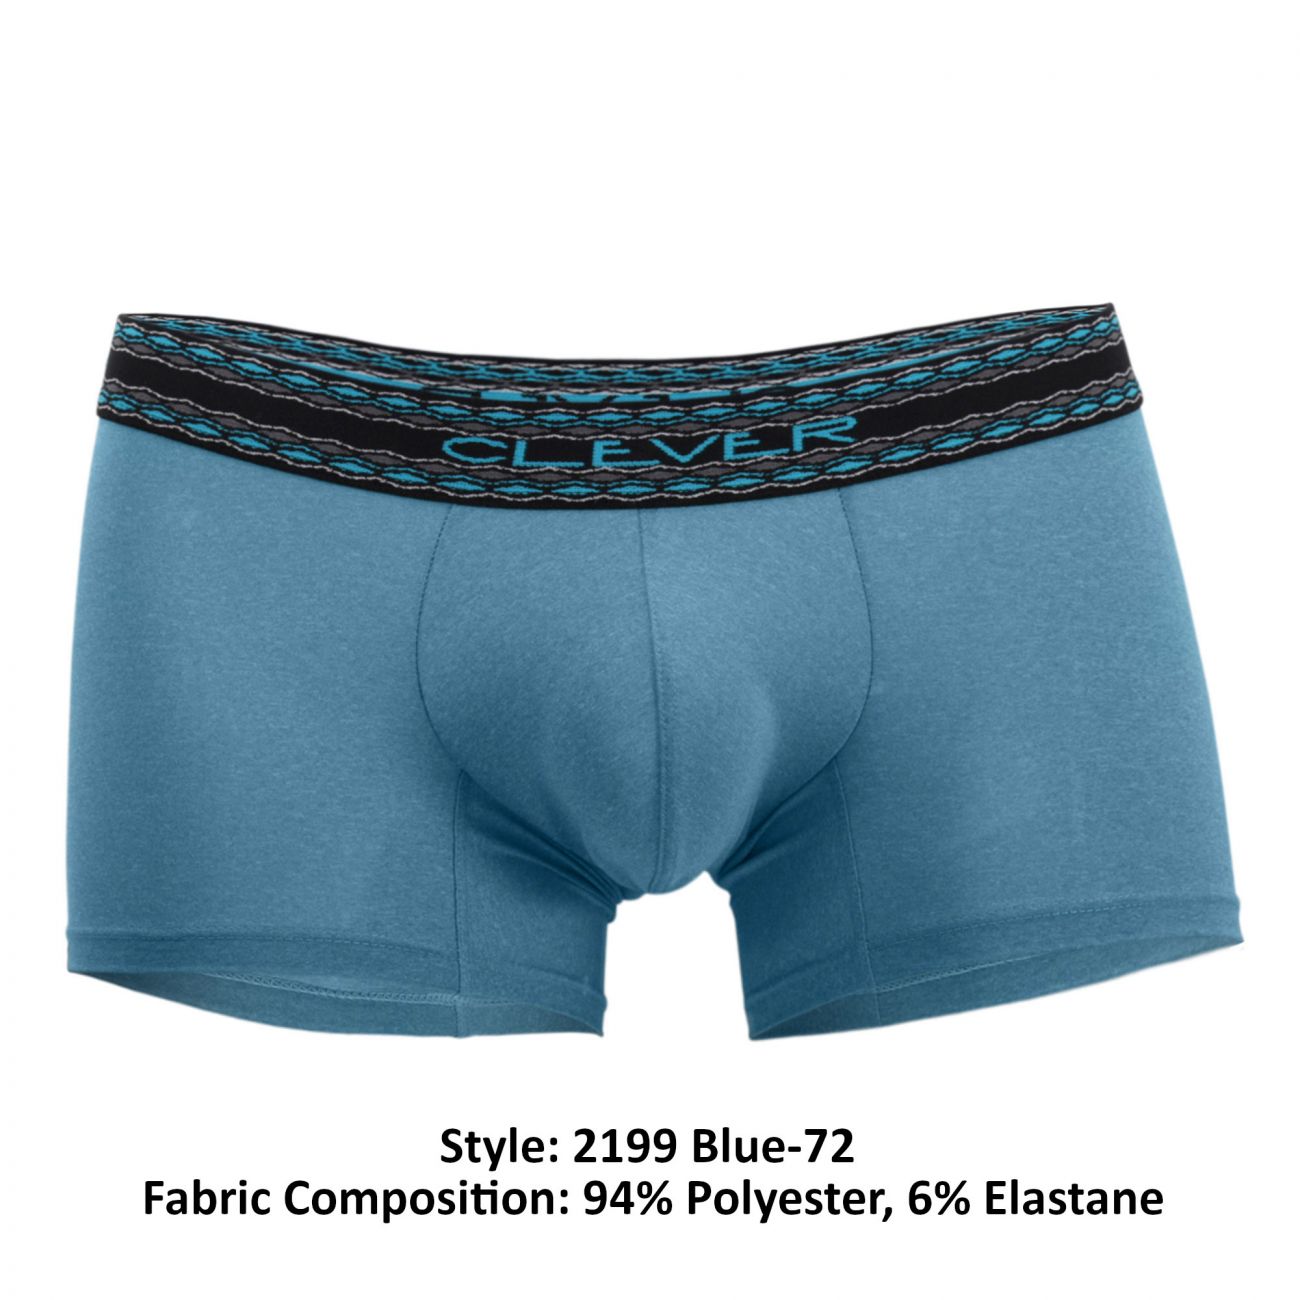 Underwear: Clever 2199 Limited Edition Boxer Briefs Trunks | eBay